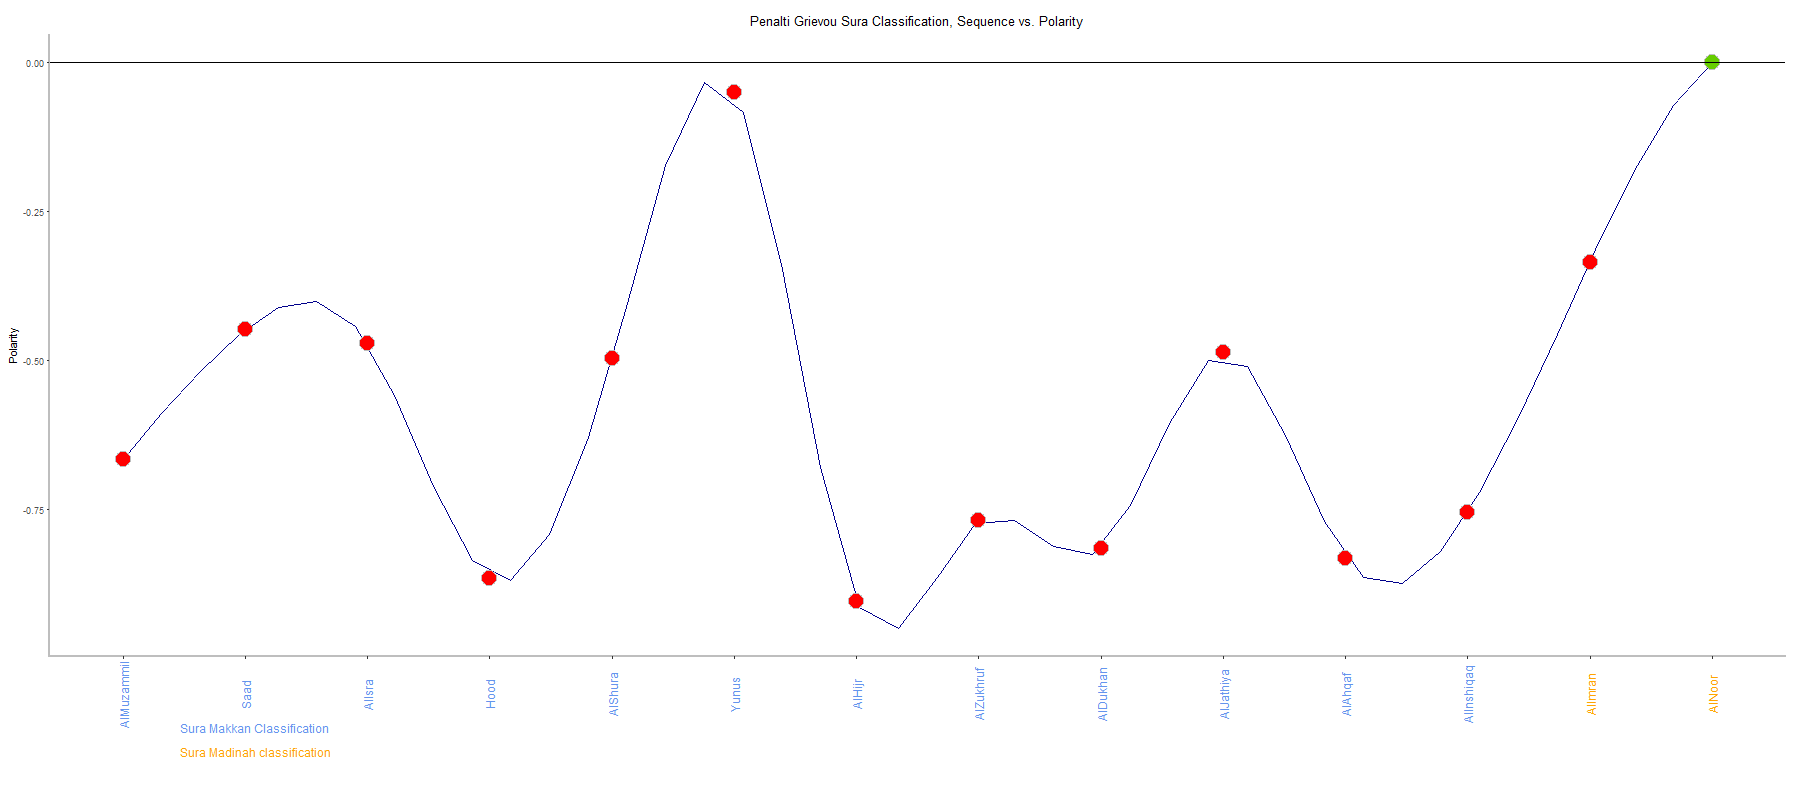 Penalti grievou by Sura Classification plot.png